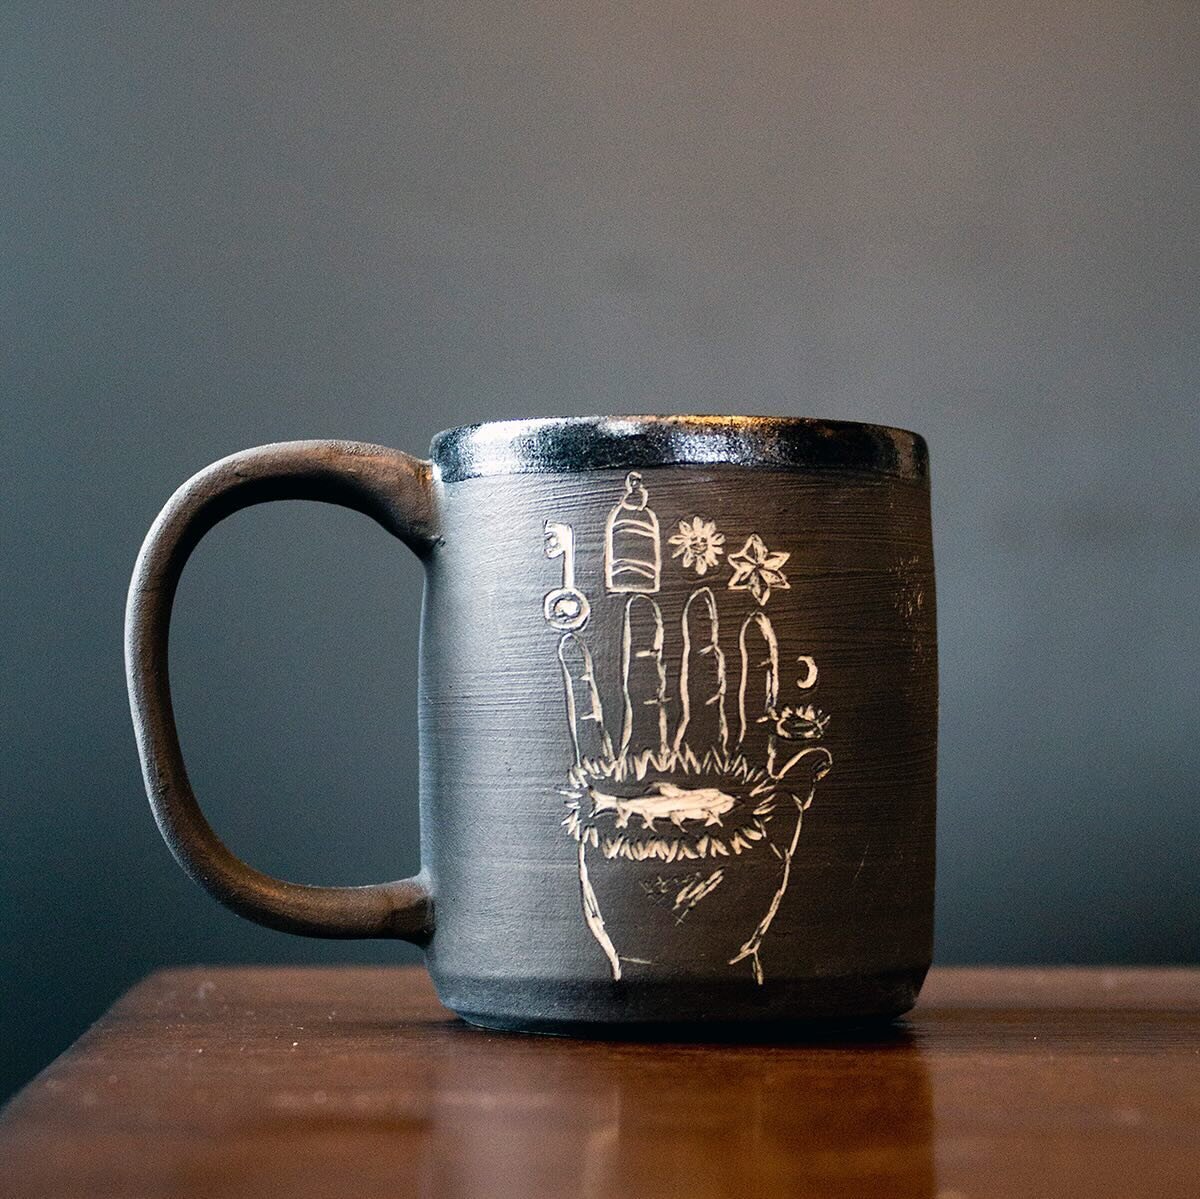 The Philosophers Hand mug. Up now on Etsy. #philosophershand #alchemy #handmadepottery #coffeemug